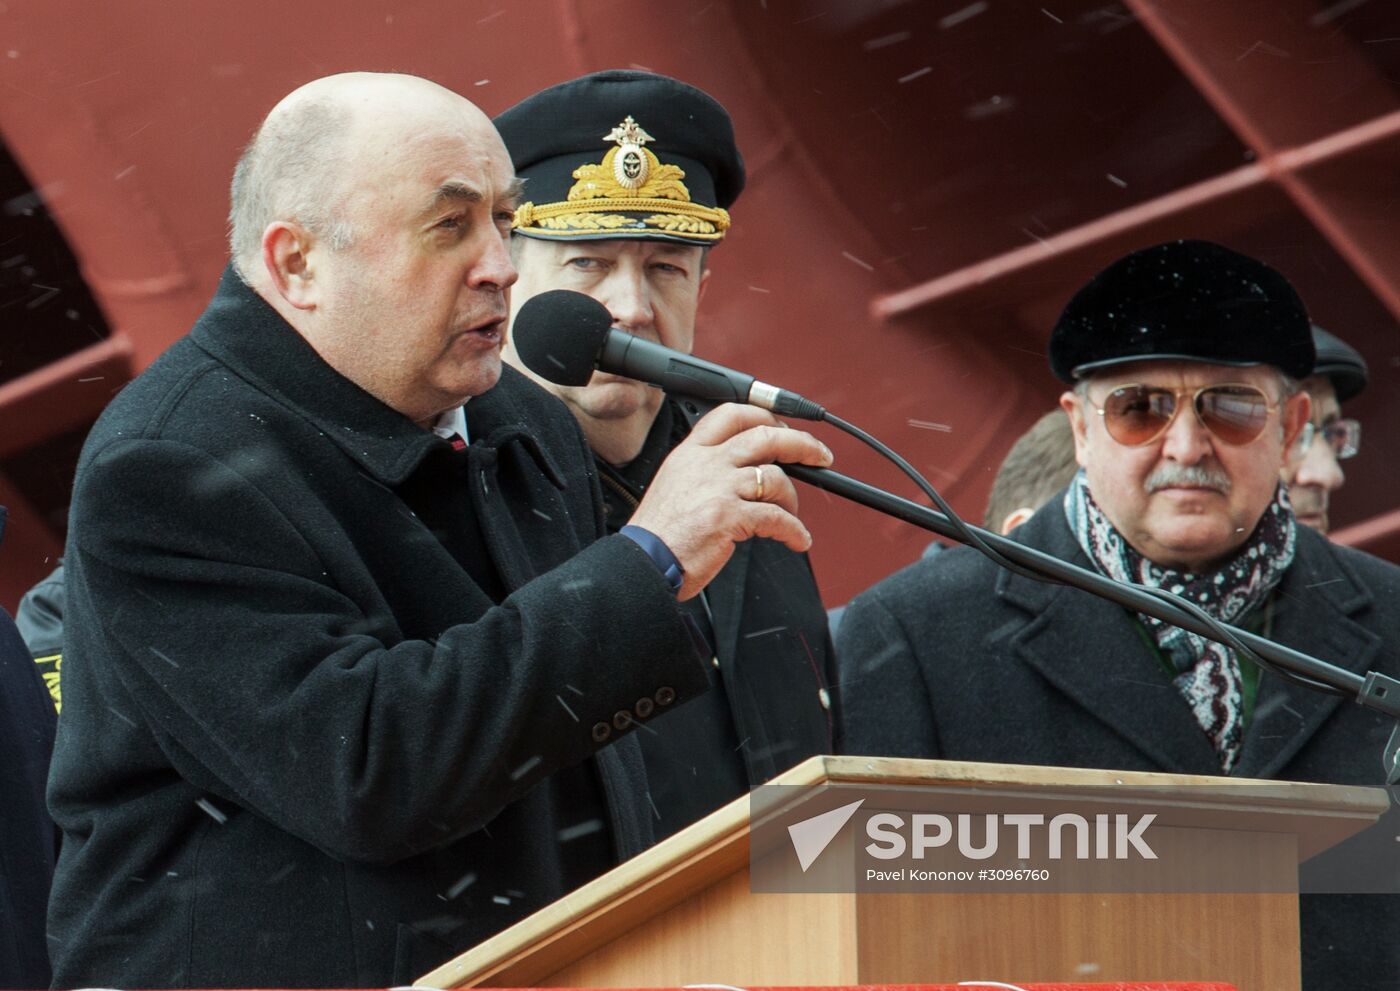 Launching Akademik Aleksandrov rescue tugboat in Severodvinsk